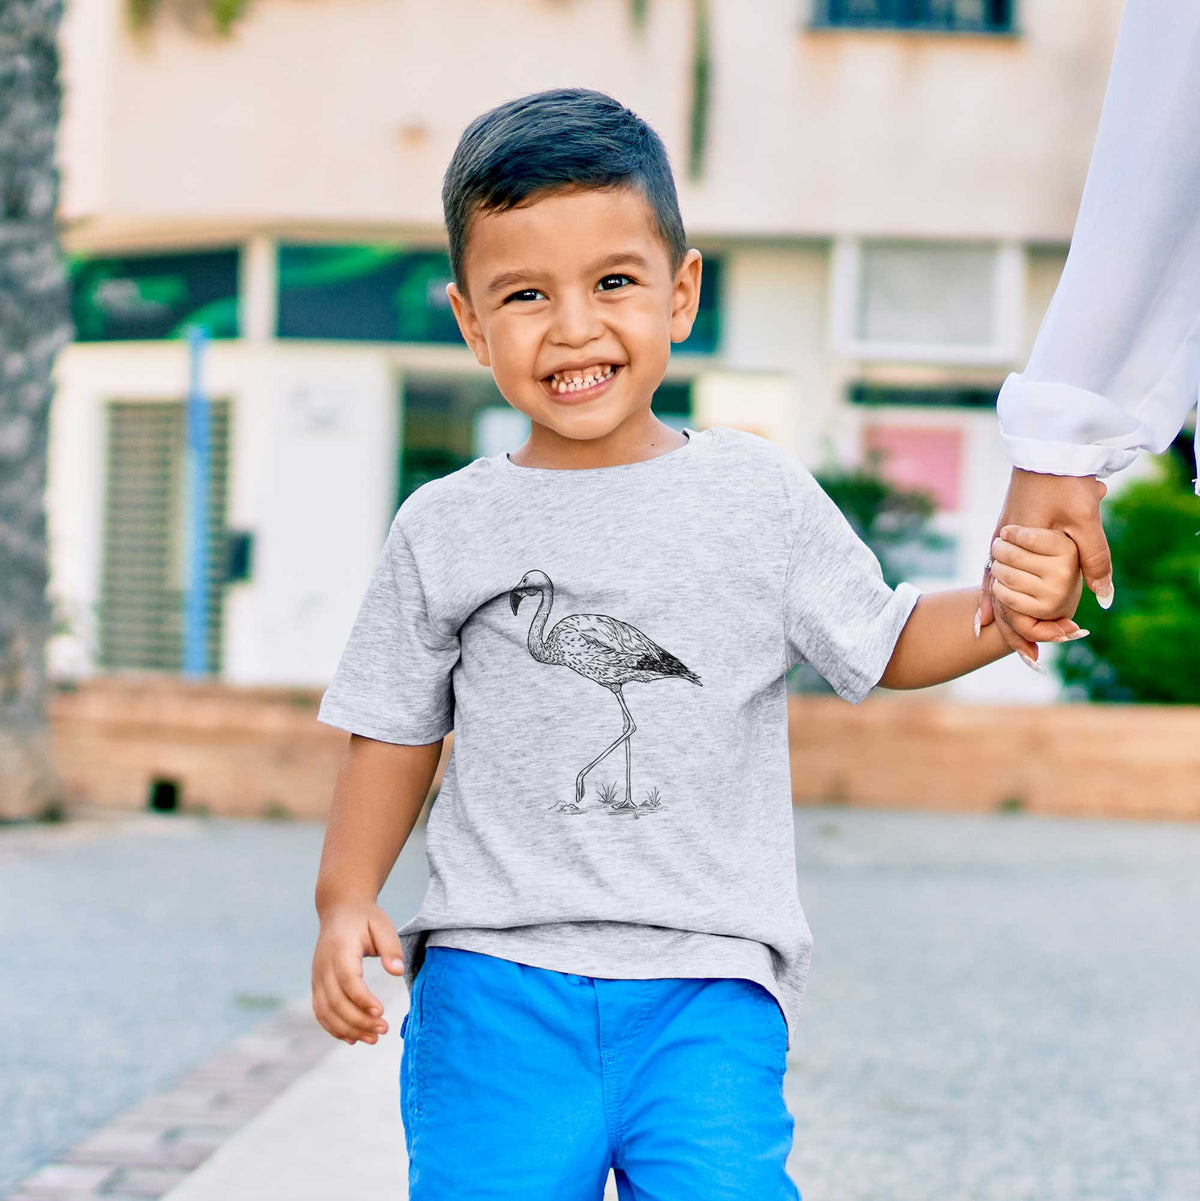 Andean Flamingo - Phoenicoparrus andinus - Kids Shirt